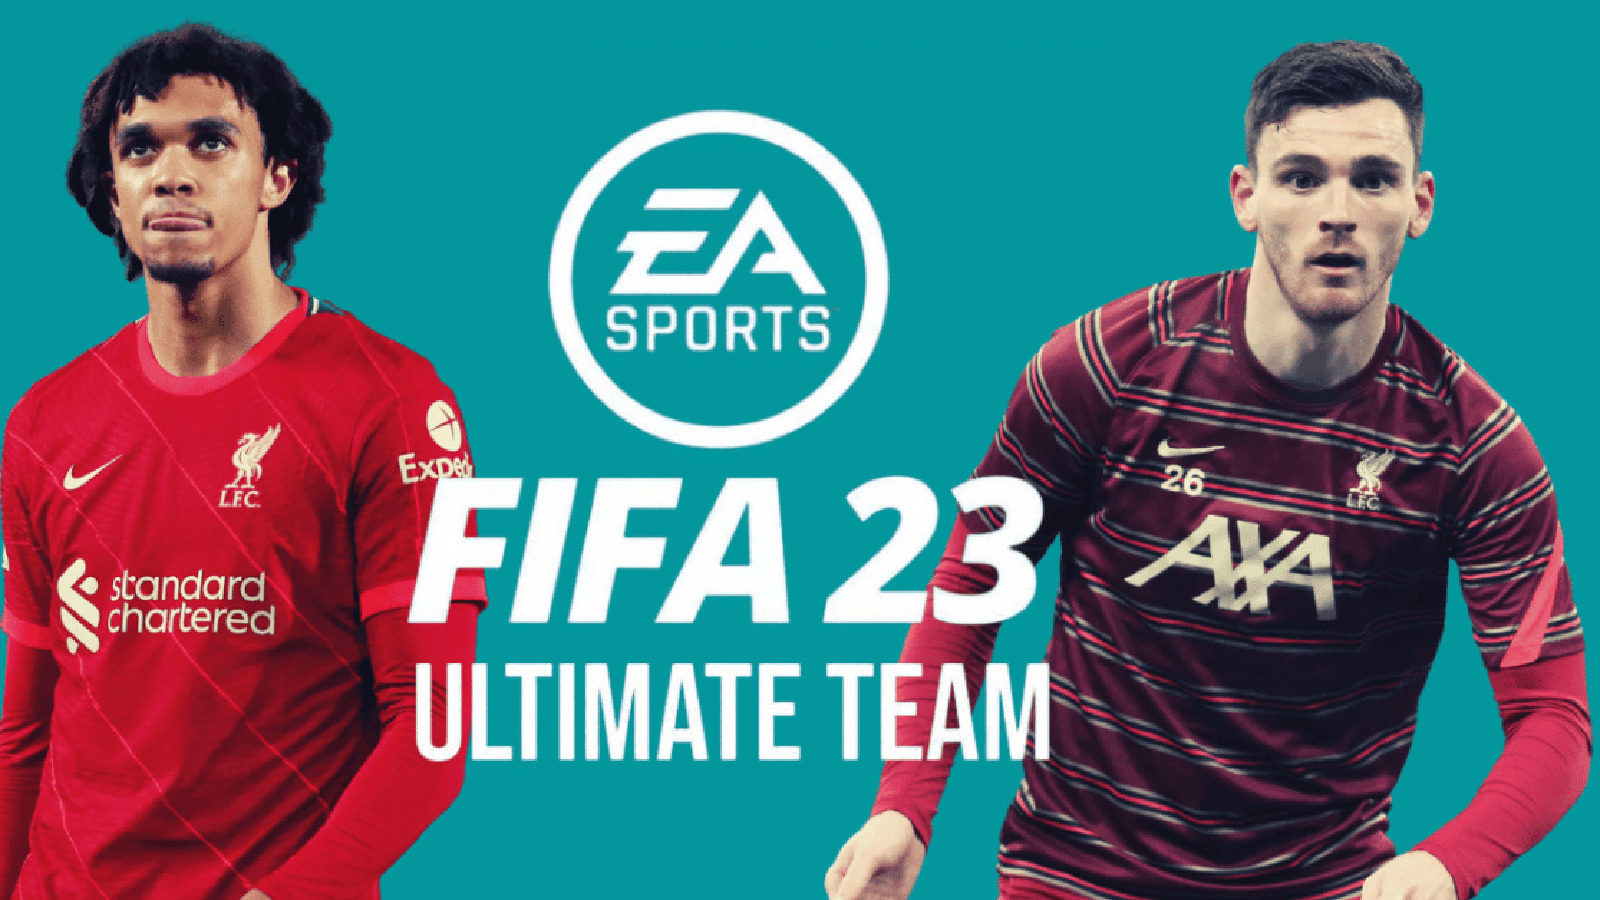 TOTW Upgrade SBC in FIFA 23 Ultimate Team